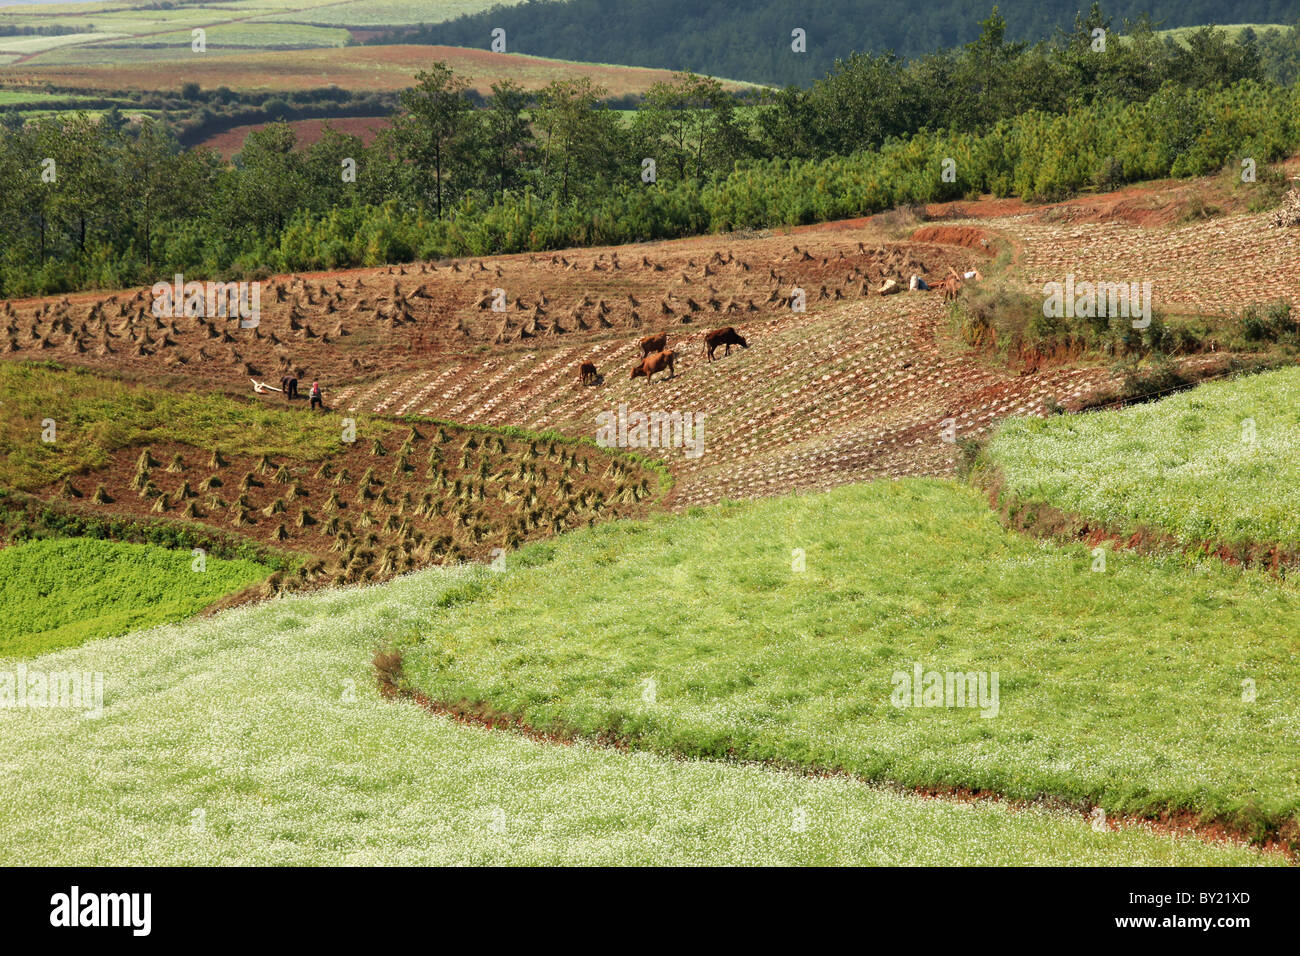 Red Land Soil, Dongchuan, Yunnan Province, China Stock Photo